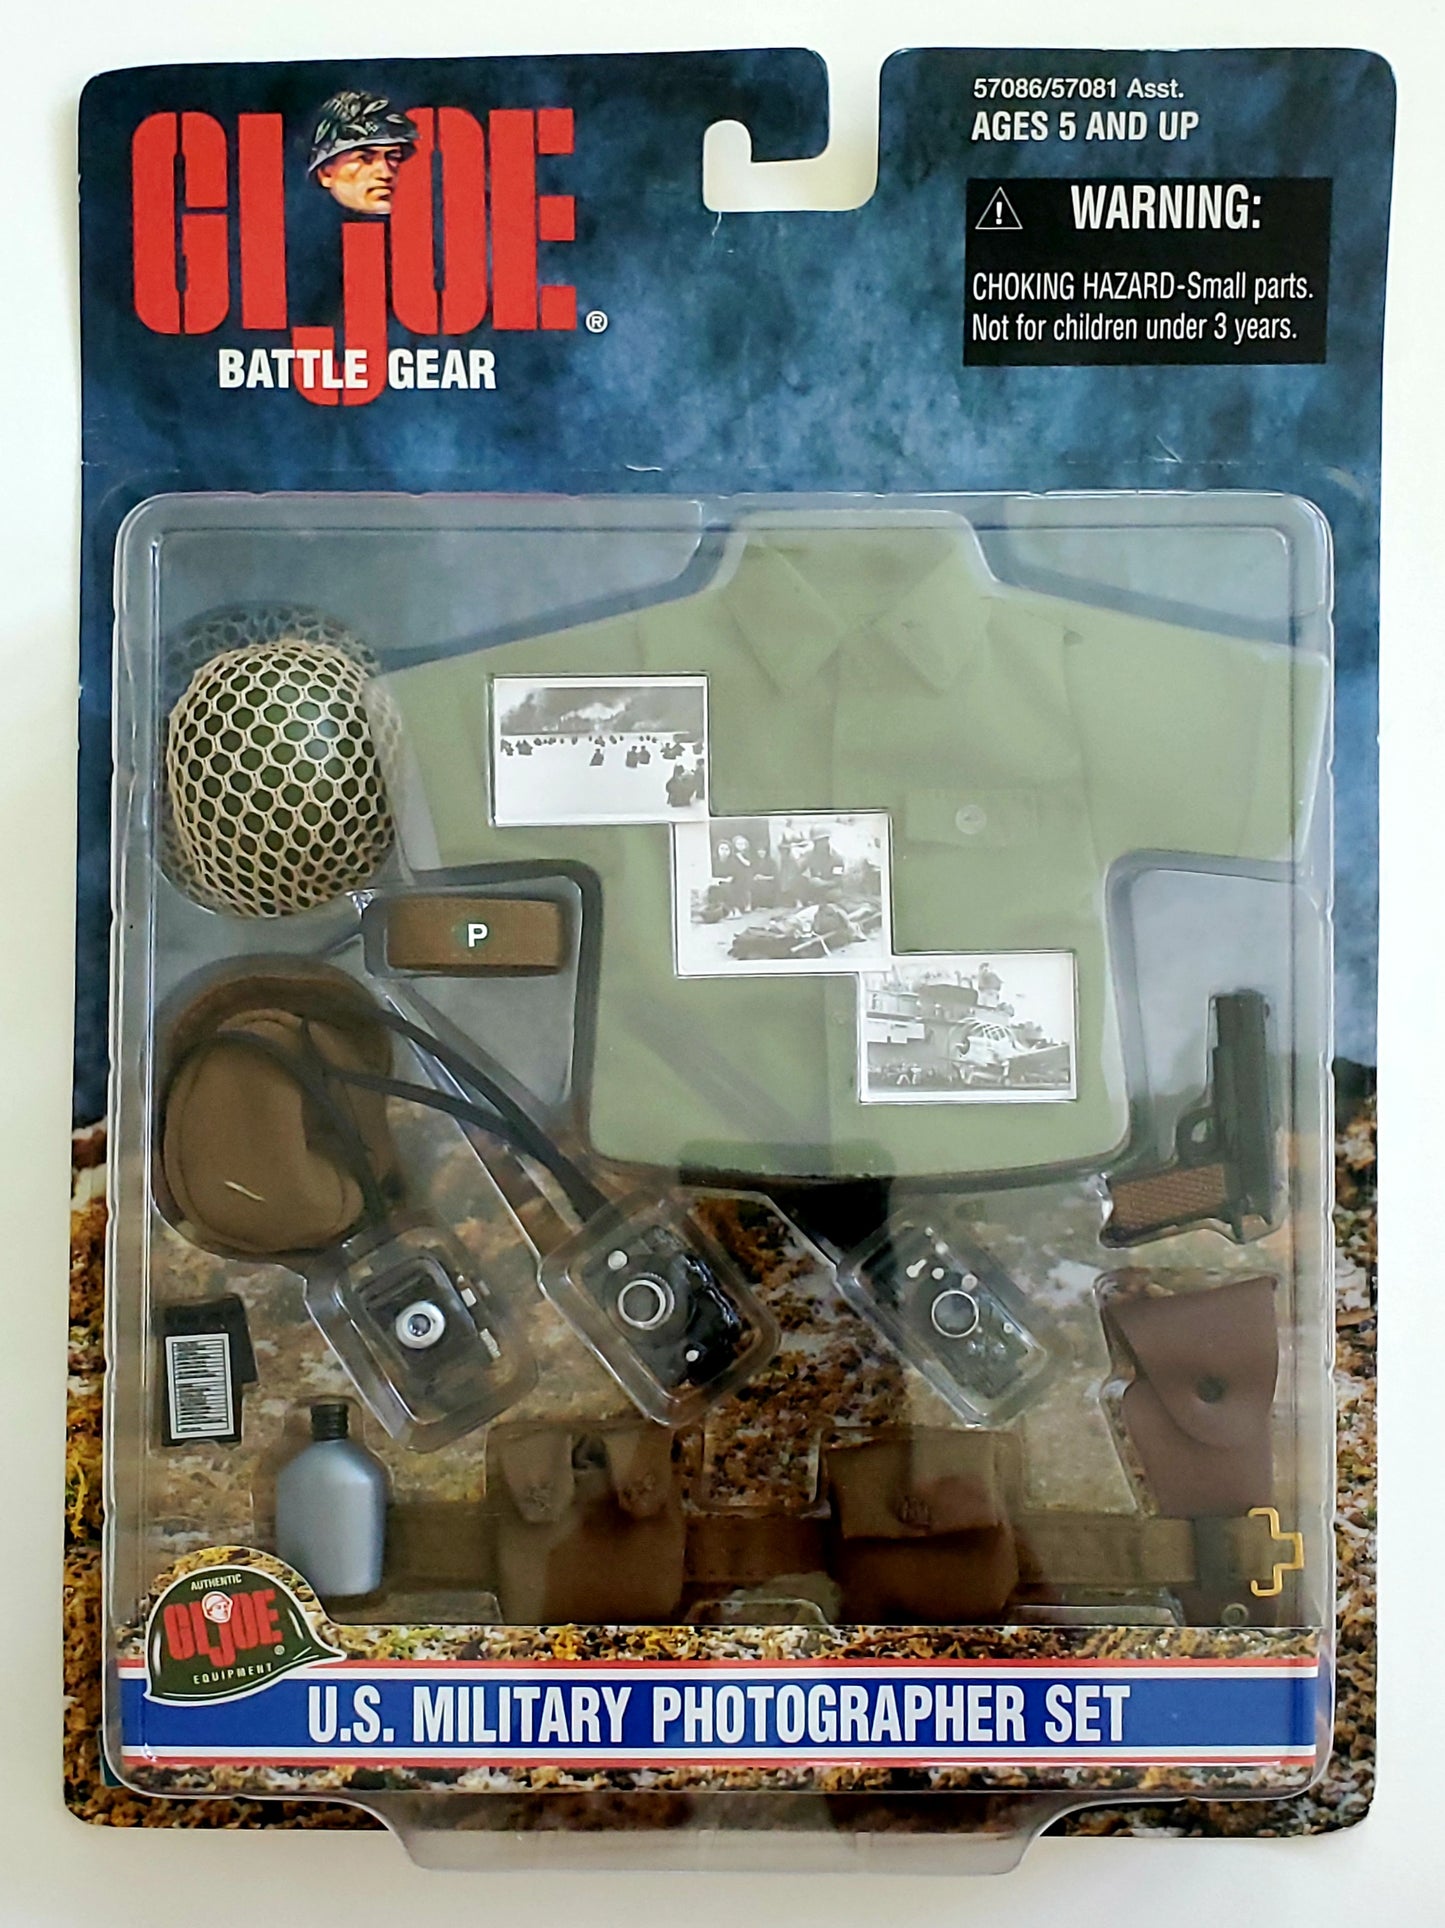 G.I. Joe Battle Gear U.S. Military Photographer Set